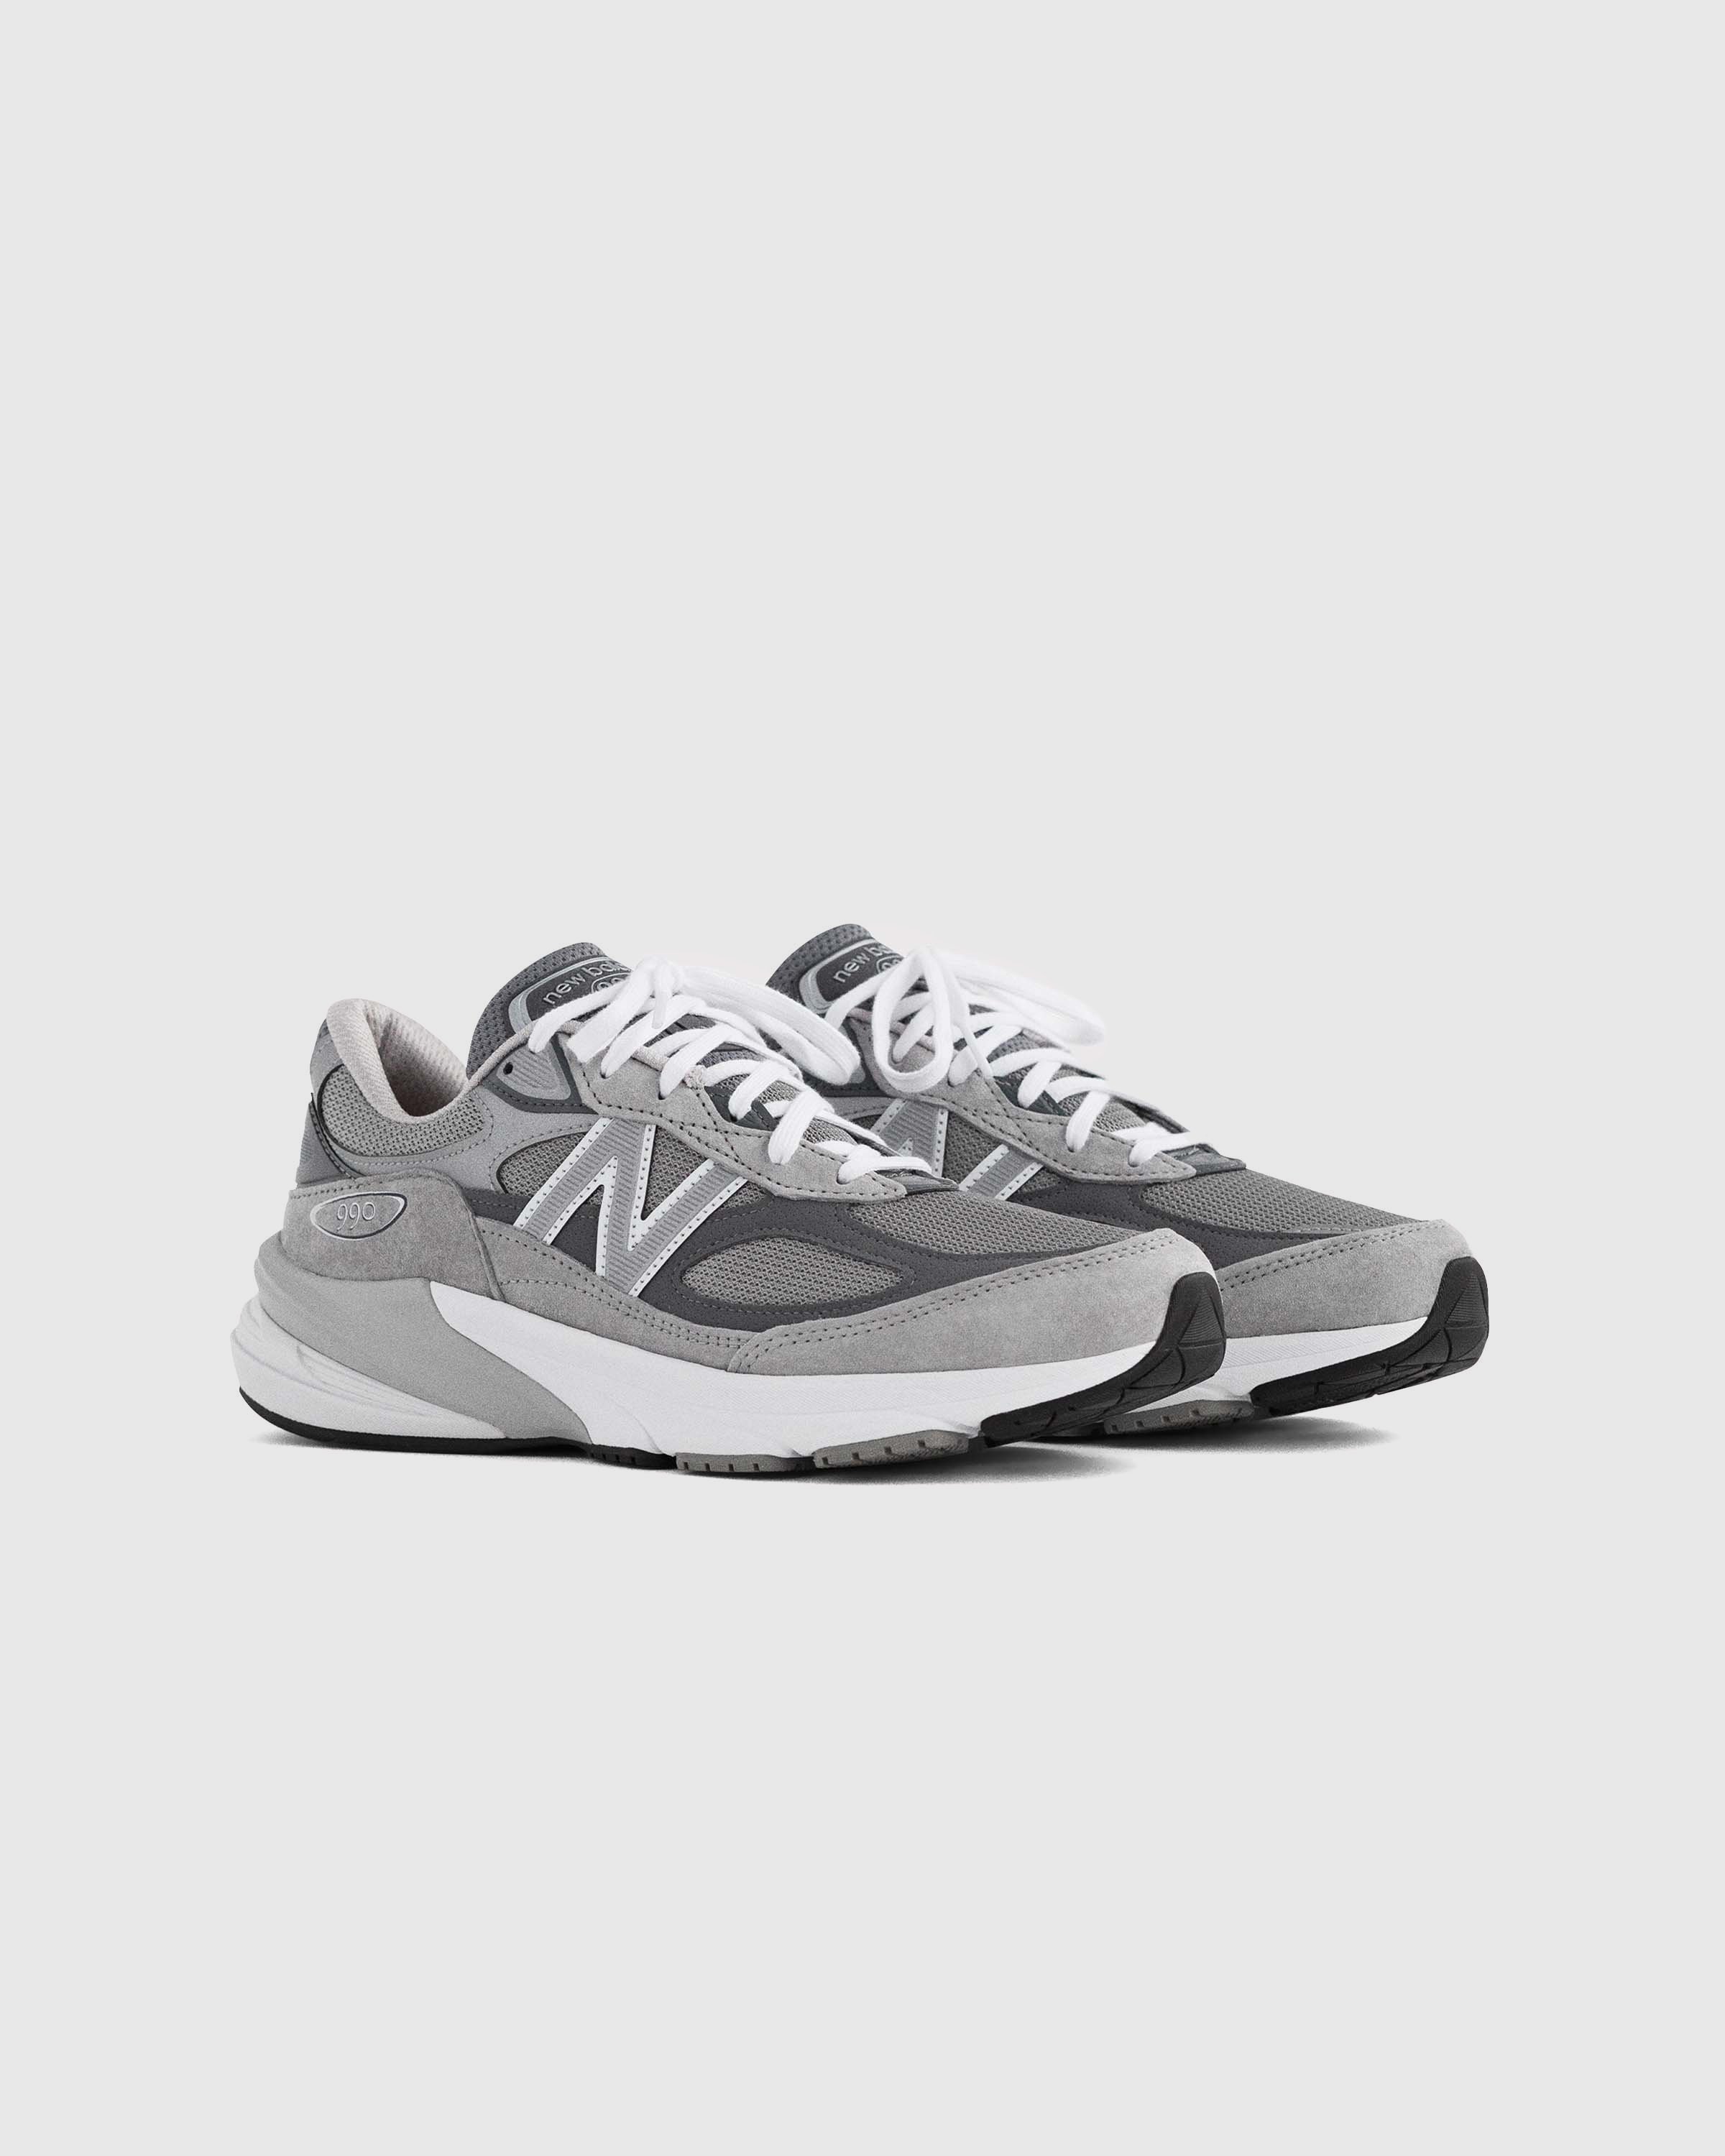 New Balance - M 990v6 Cool Gray - Footwear - Grey - Image 3